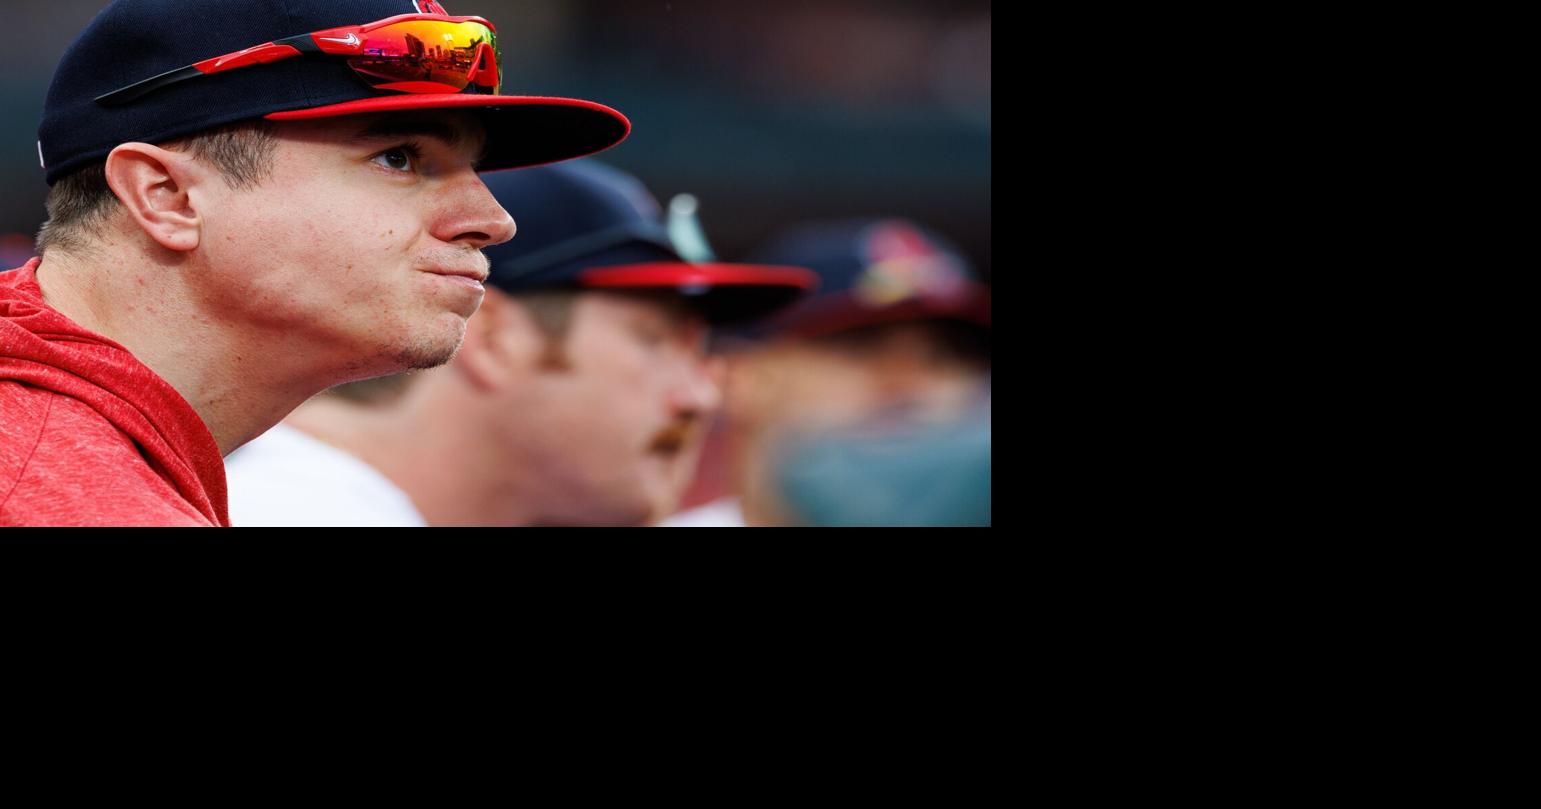 Cardinals: Latest Tyler O'Neill injury update complicates trade